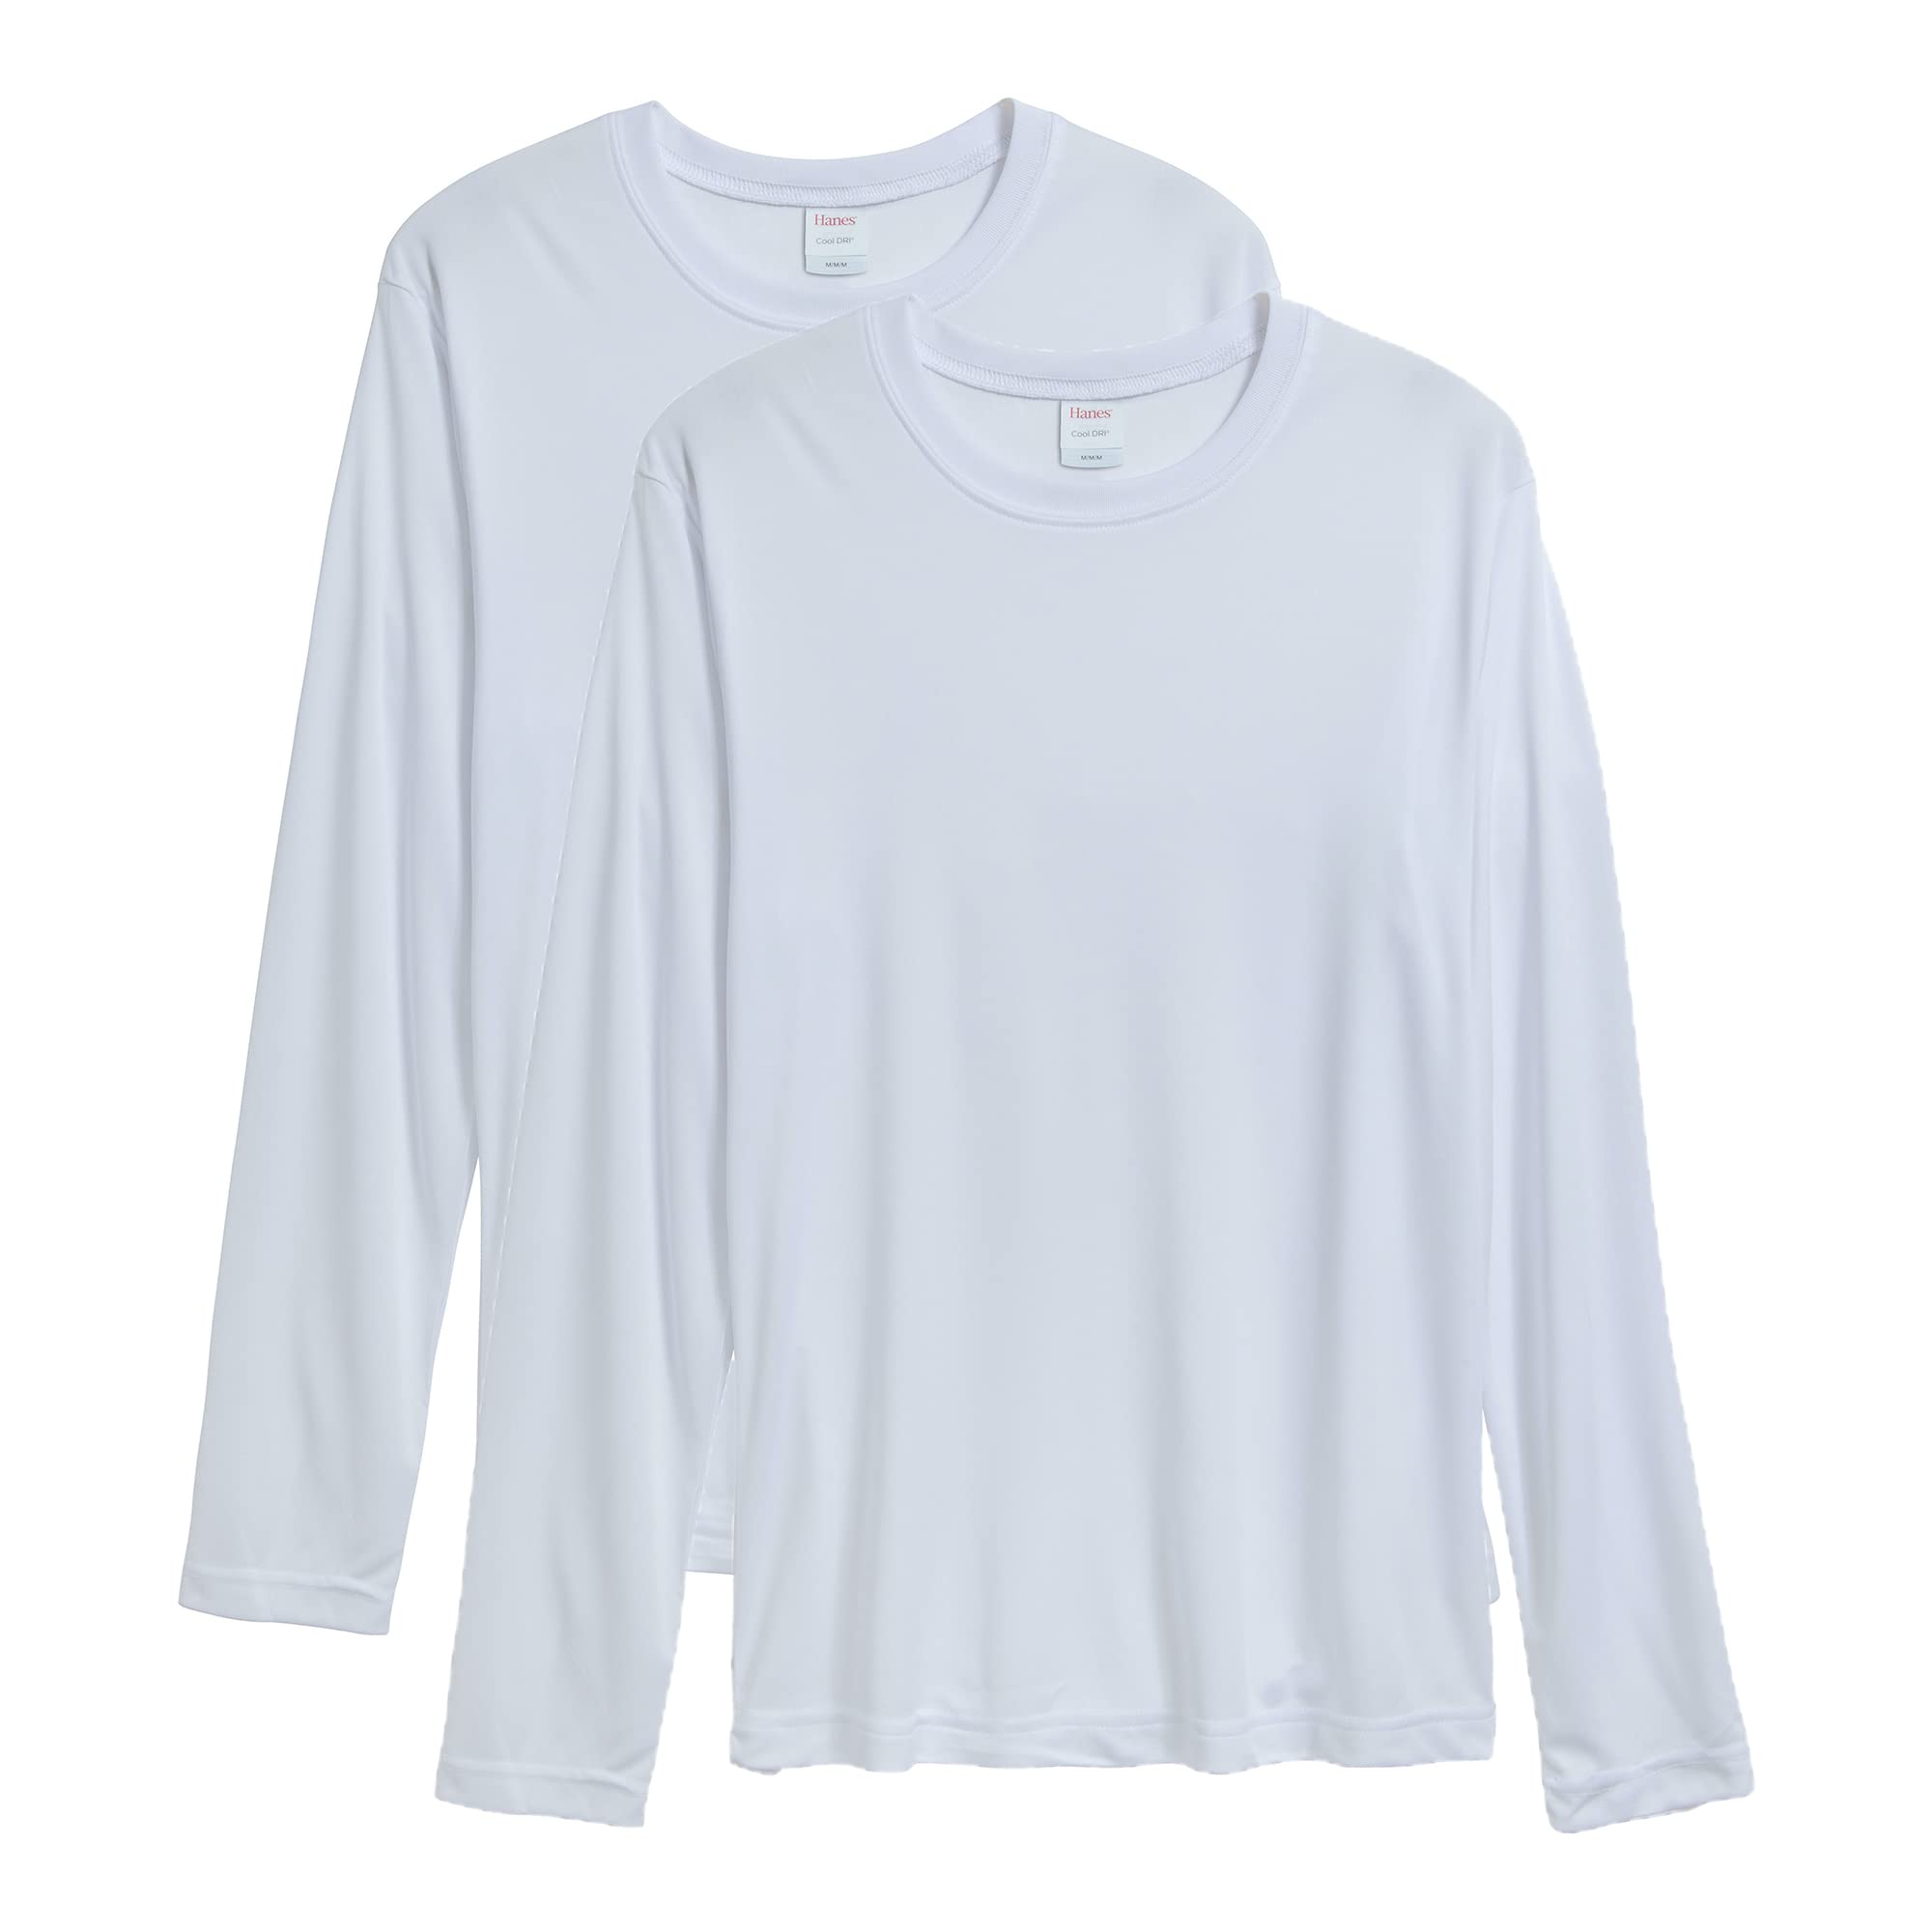 Hanes Long Sleeve Shirts 50+ UPF 2 for $16.50